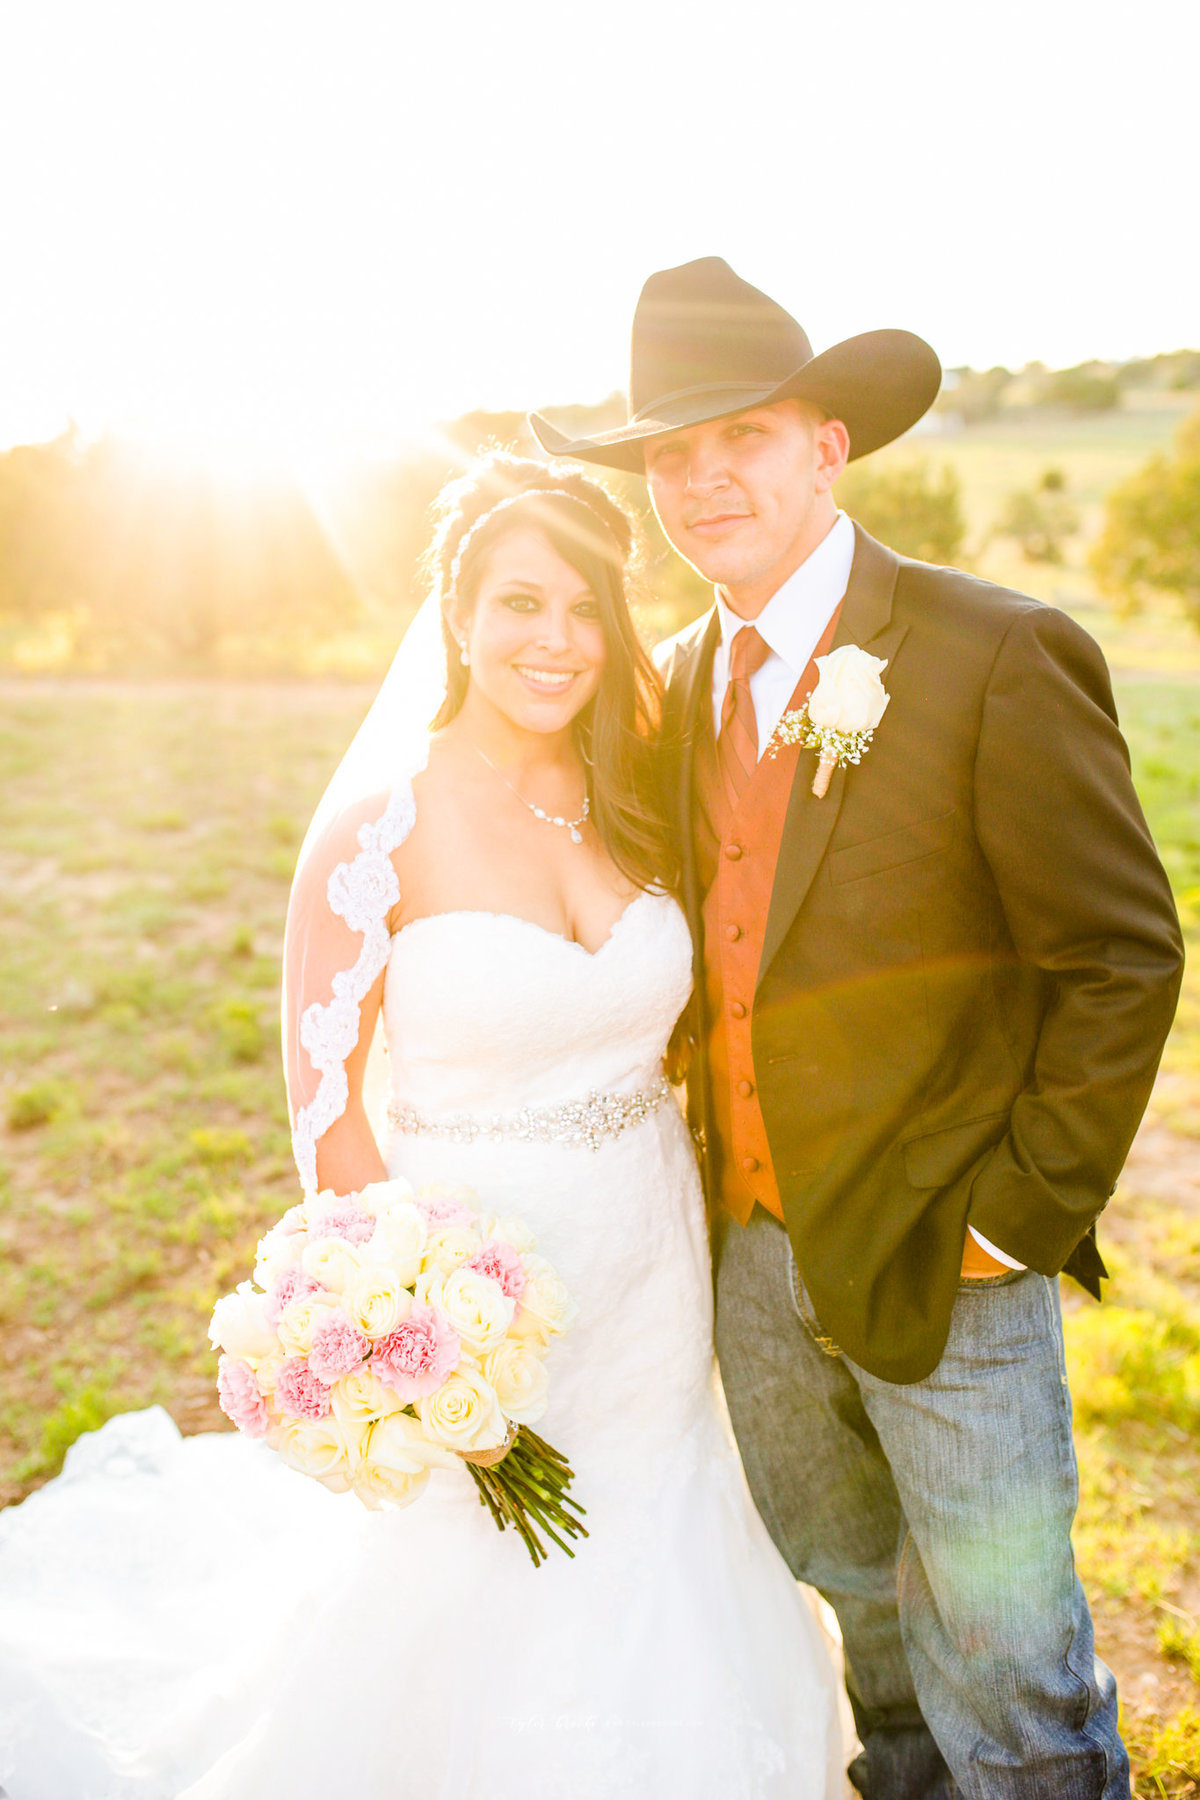 Edgewood-New-Mexico_Country-Wedding-Photographer_www.tylerbrooke.com_Kate-Kauffman-26-of-35